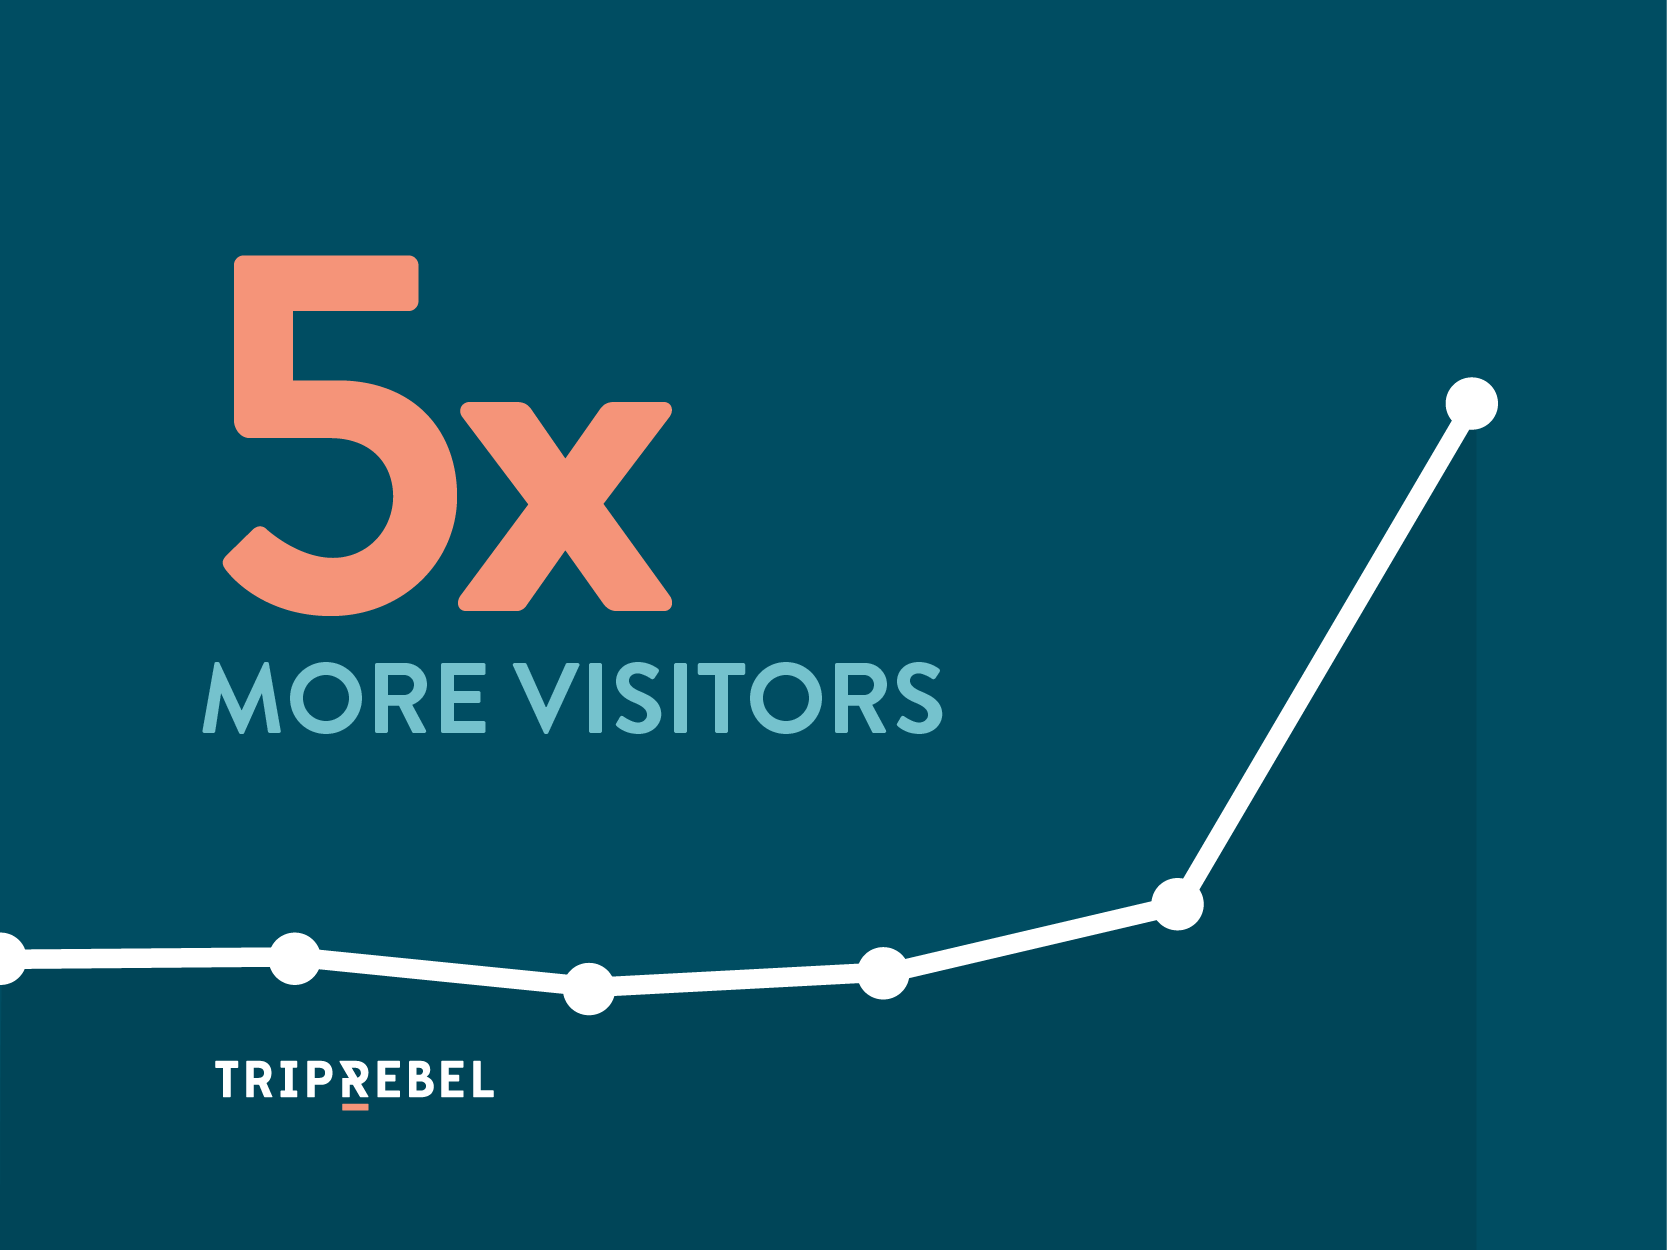 Fivefold Increase in TripRebel Visitors Since Campaign Launch